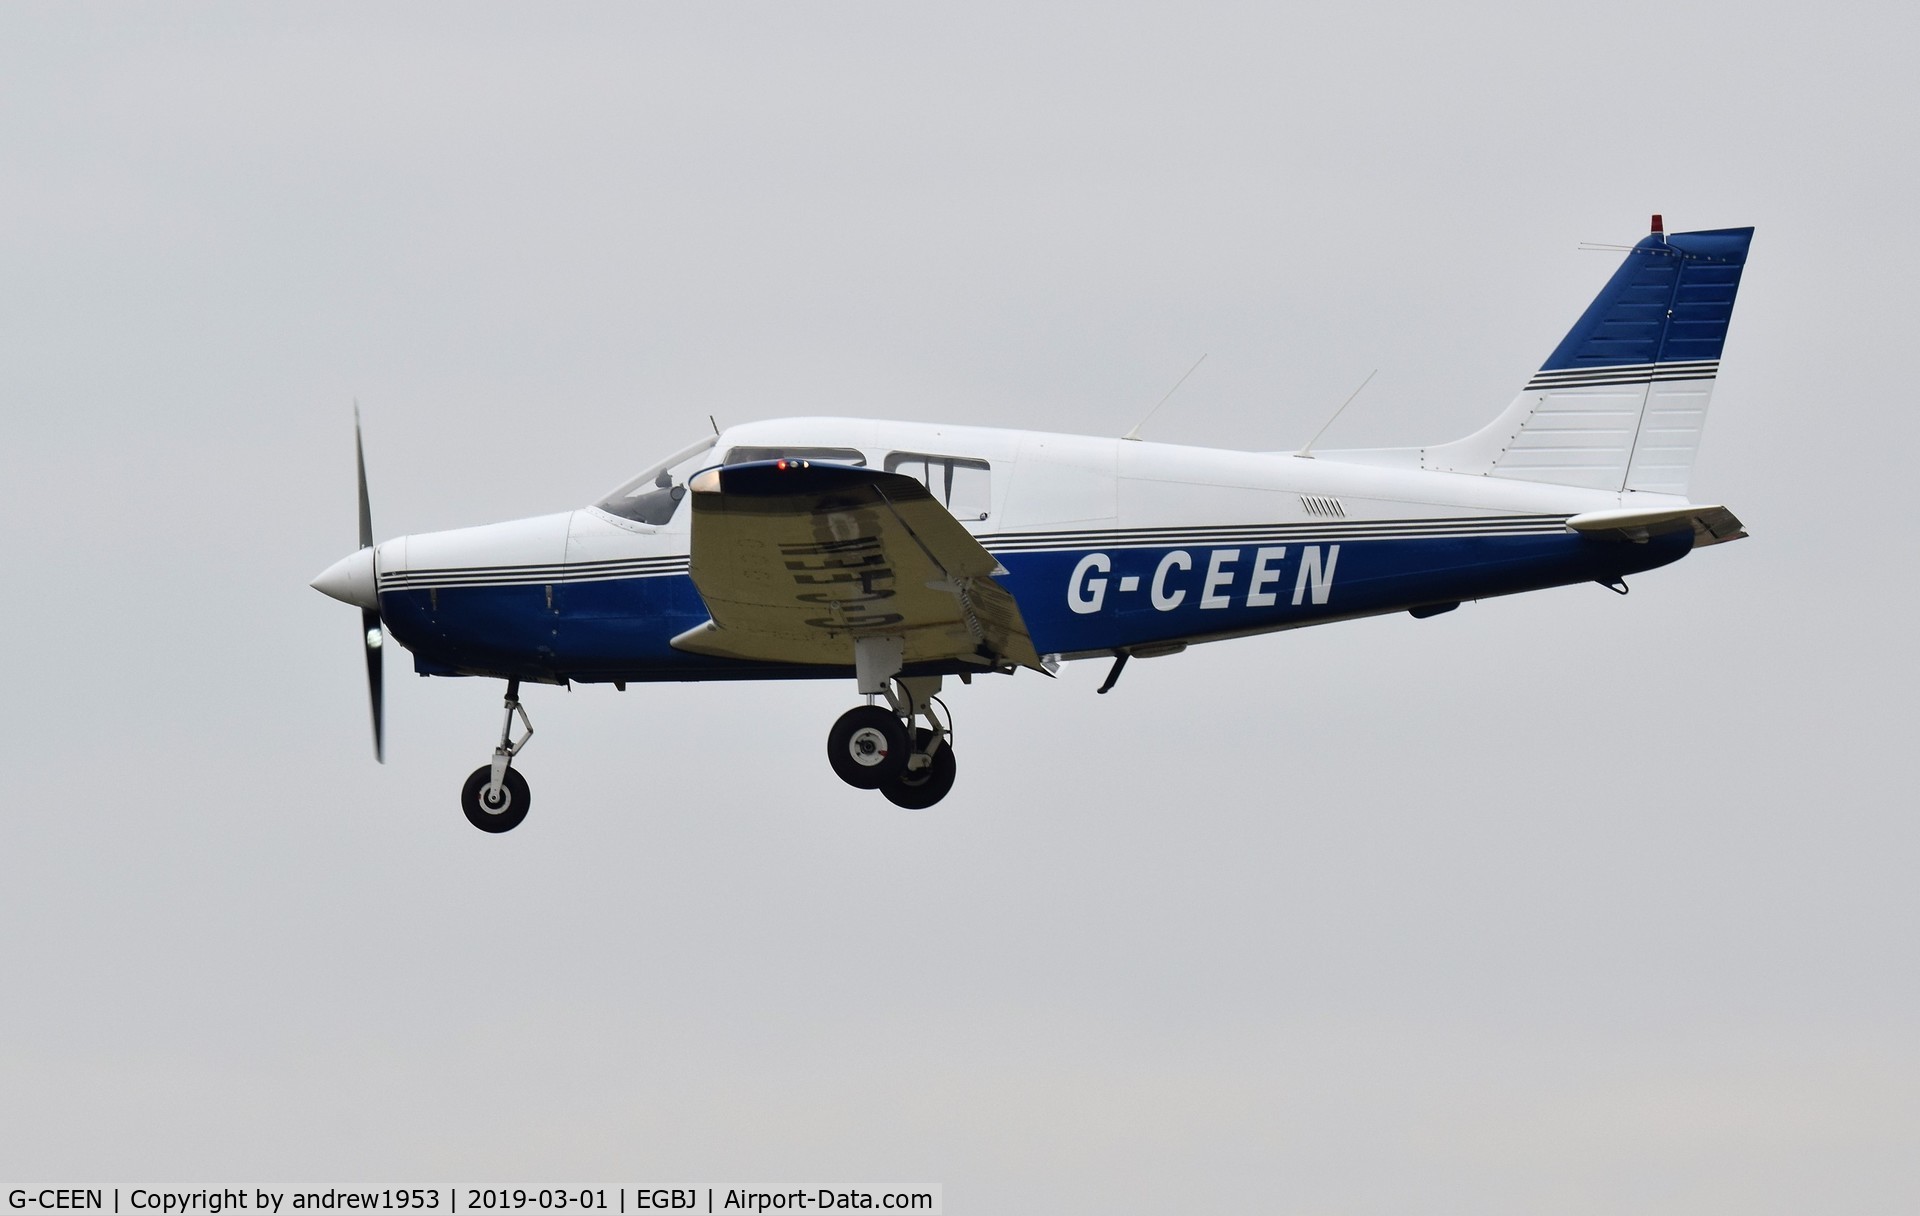 G-CEEN, 1990 Piper PA-28-161 Cadet C/N 2841293, G-CEEN landing at Gloucestershire Airport.